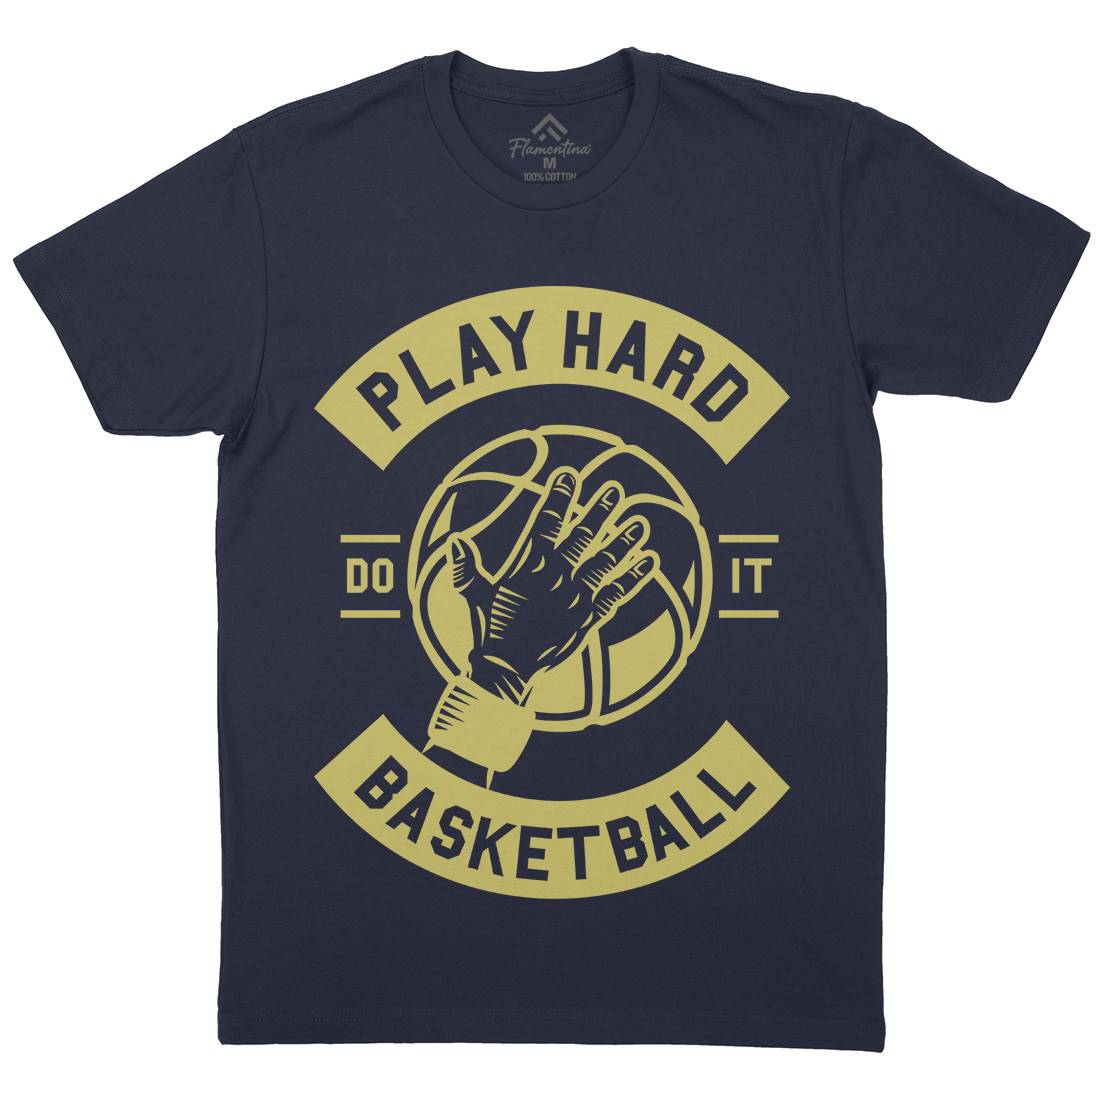 Play Hard Basketball Mens Organic Crew Neck T-Shirt Sport A261